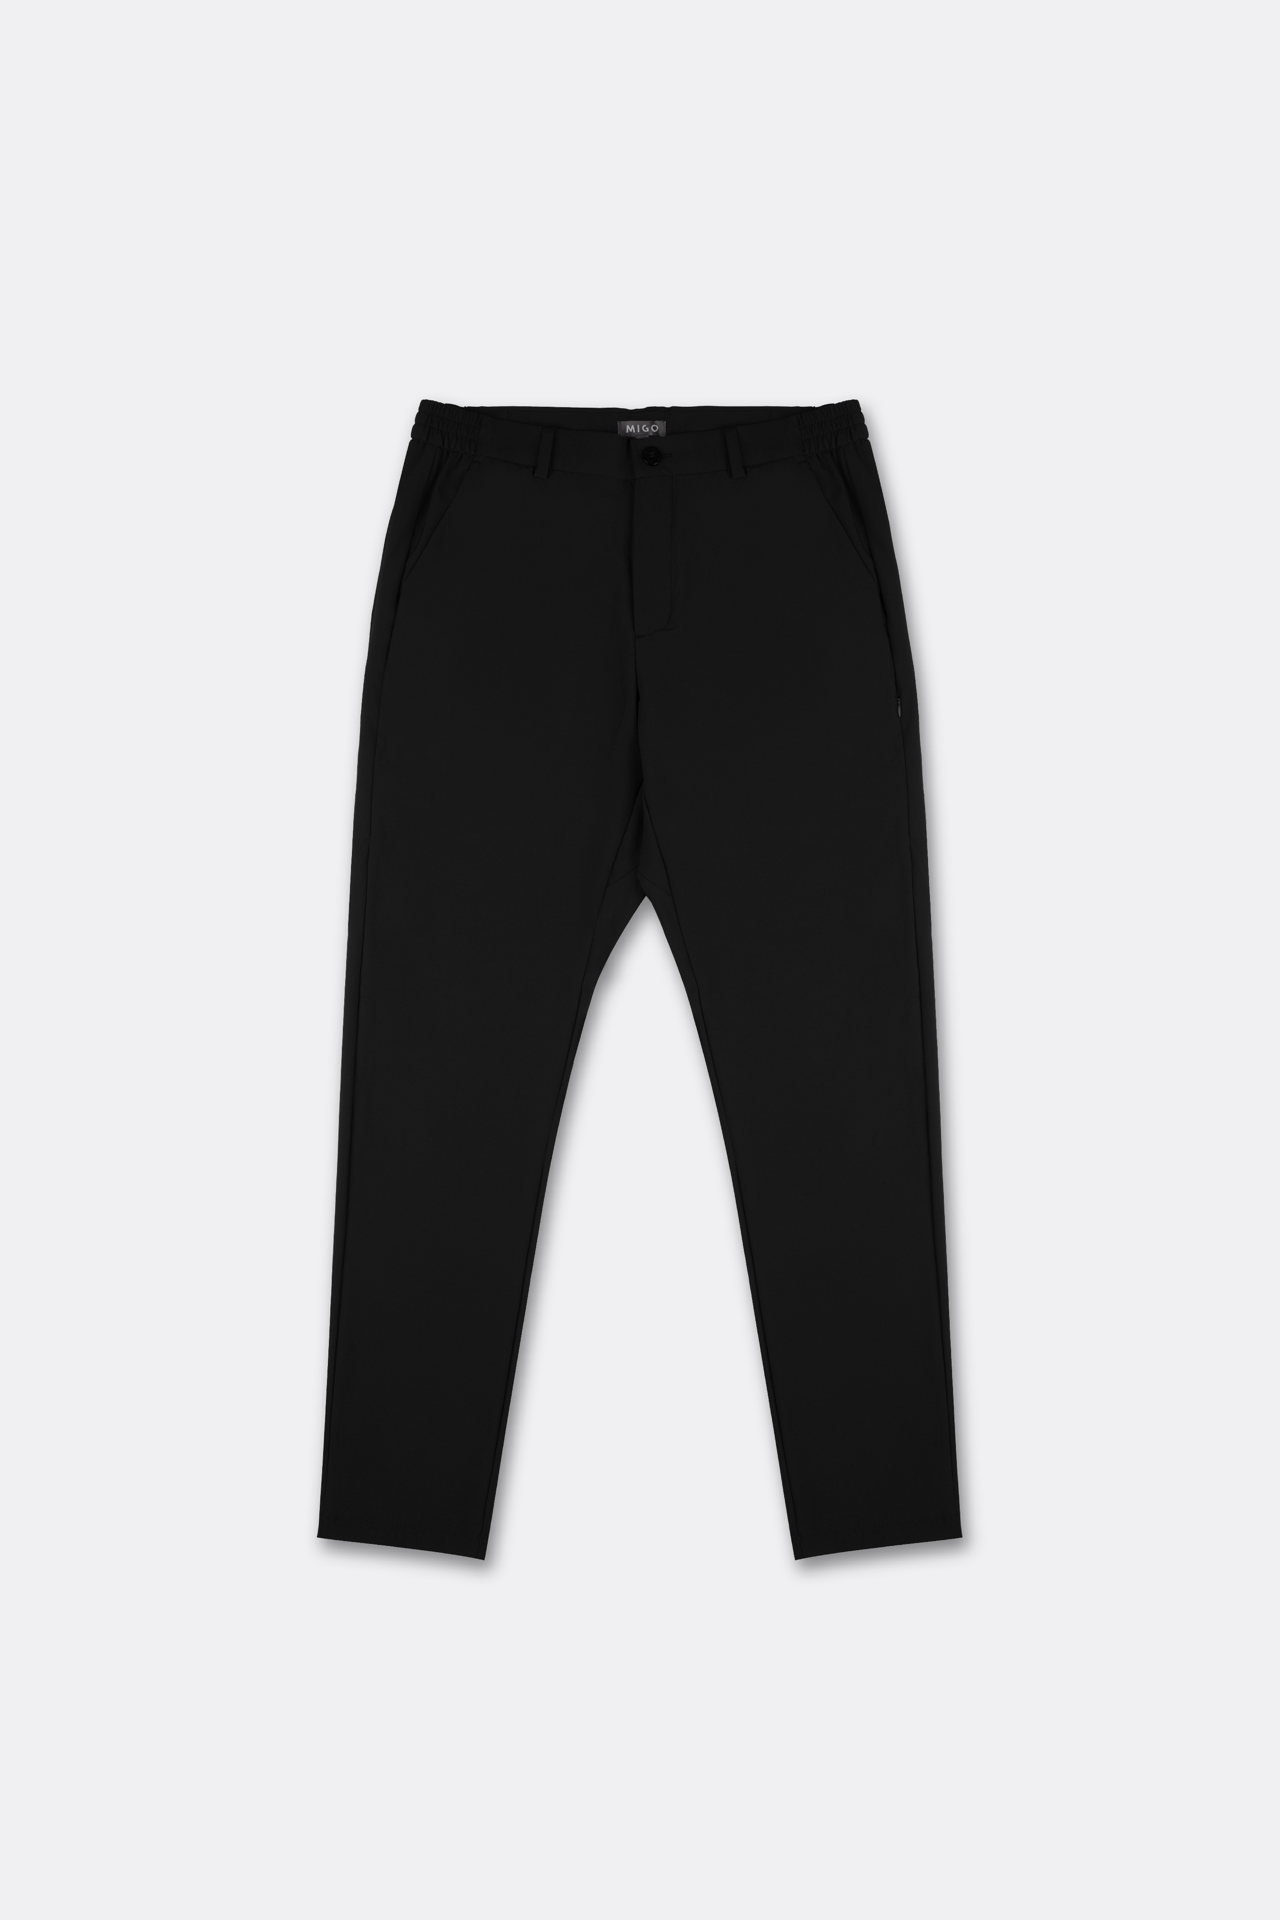 Liberty Pants 30” - [MIGO] - [Hong Kong Brand] - [Menswear] - [本地品牌] - [男裝] - [運動服] - [casual wear] 